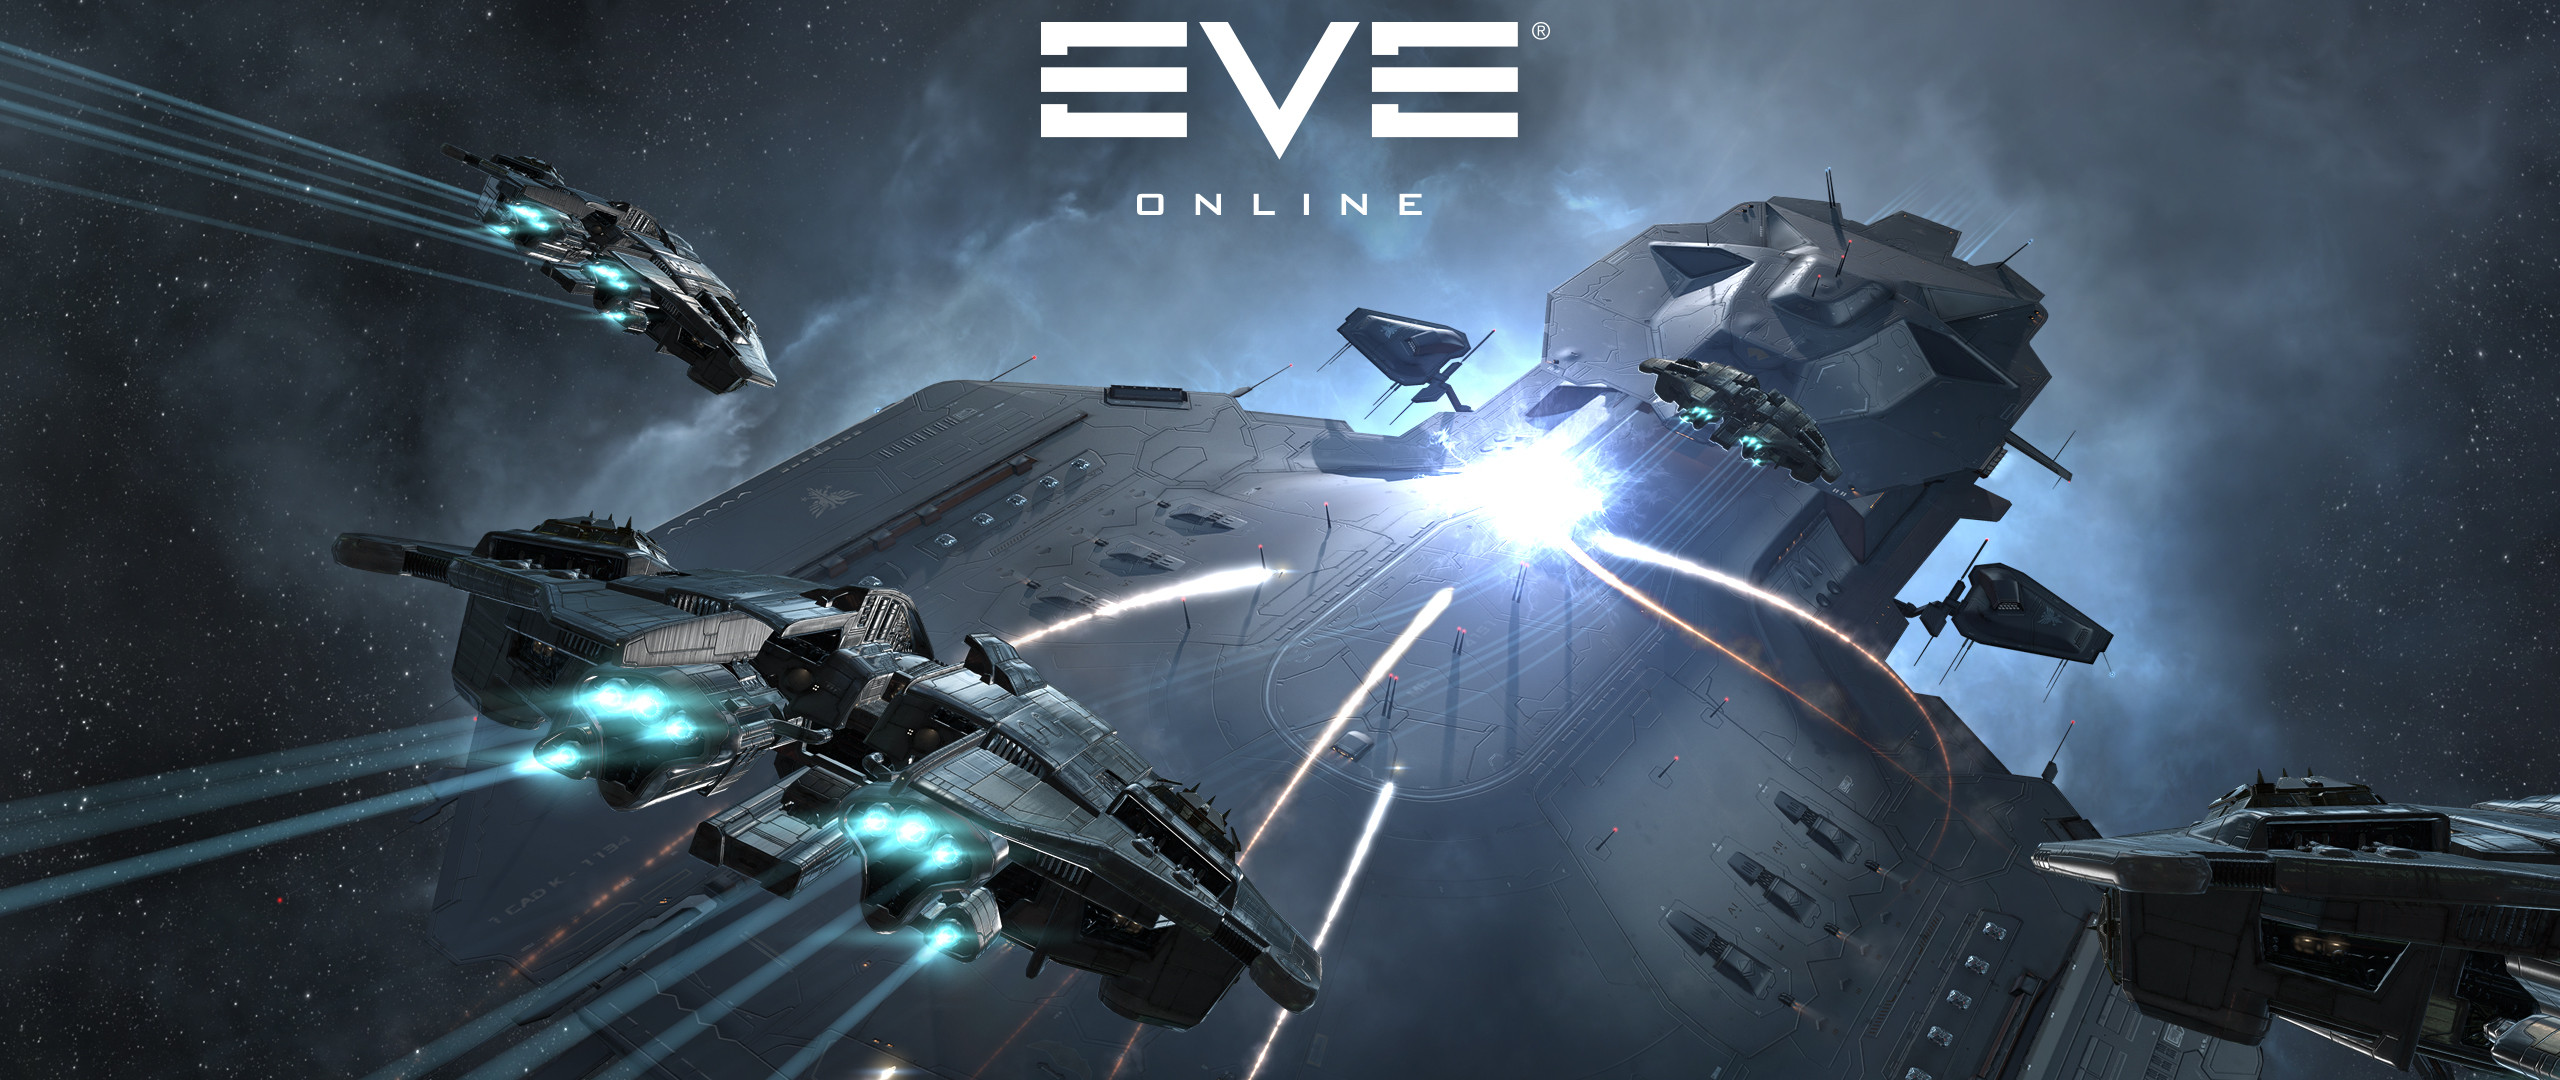 Eve Online Wallpaper Widescreenwallpaper